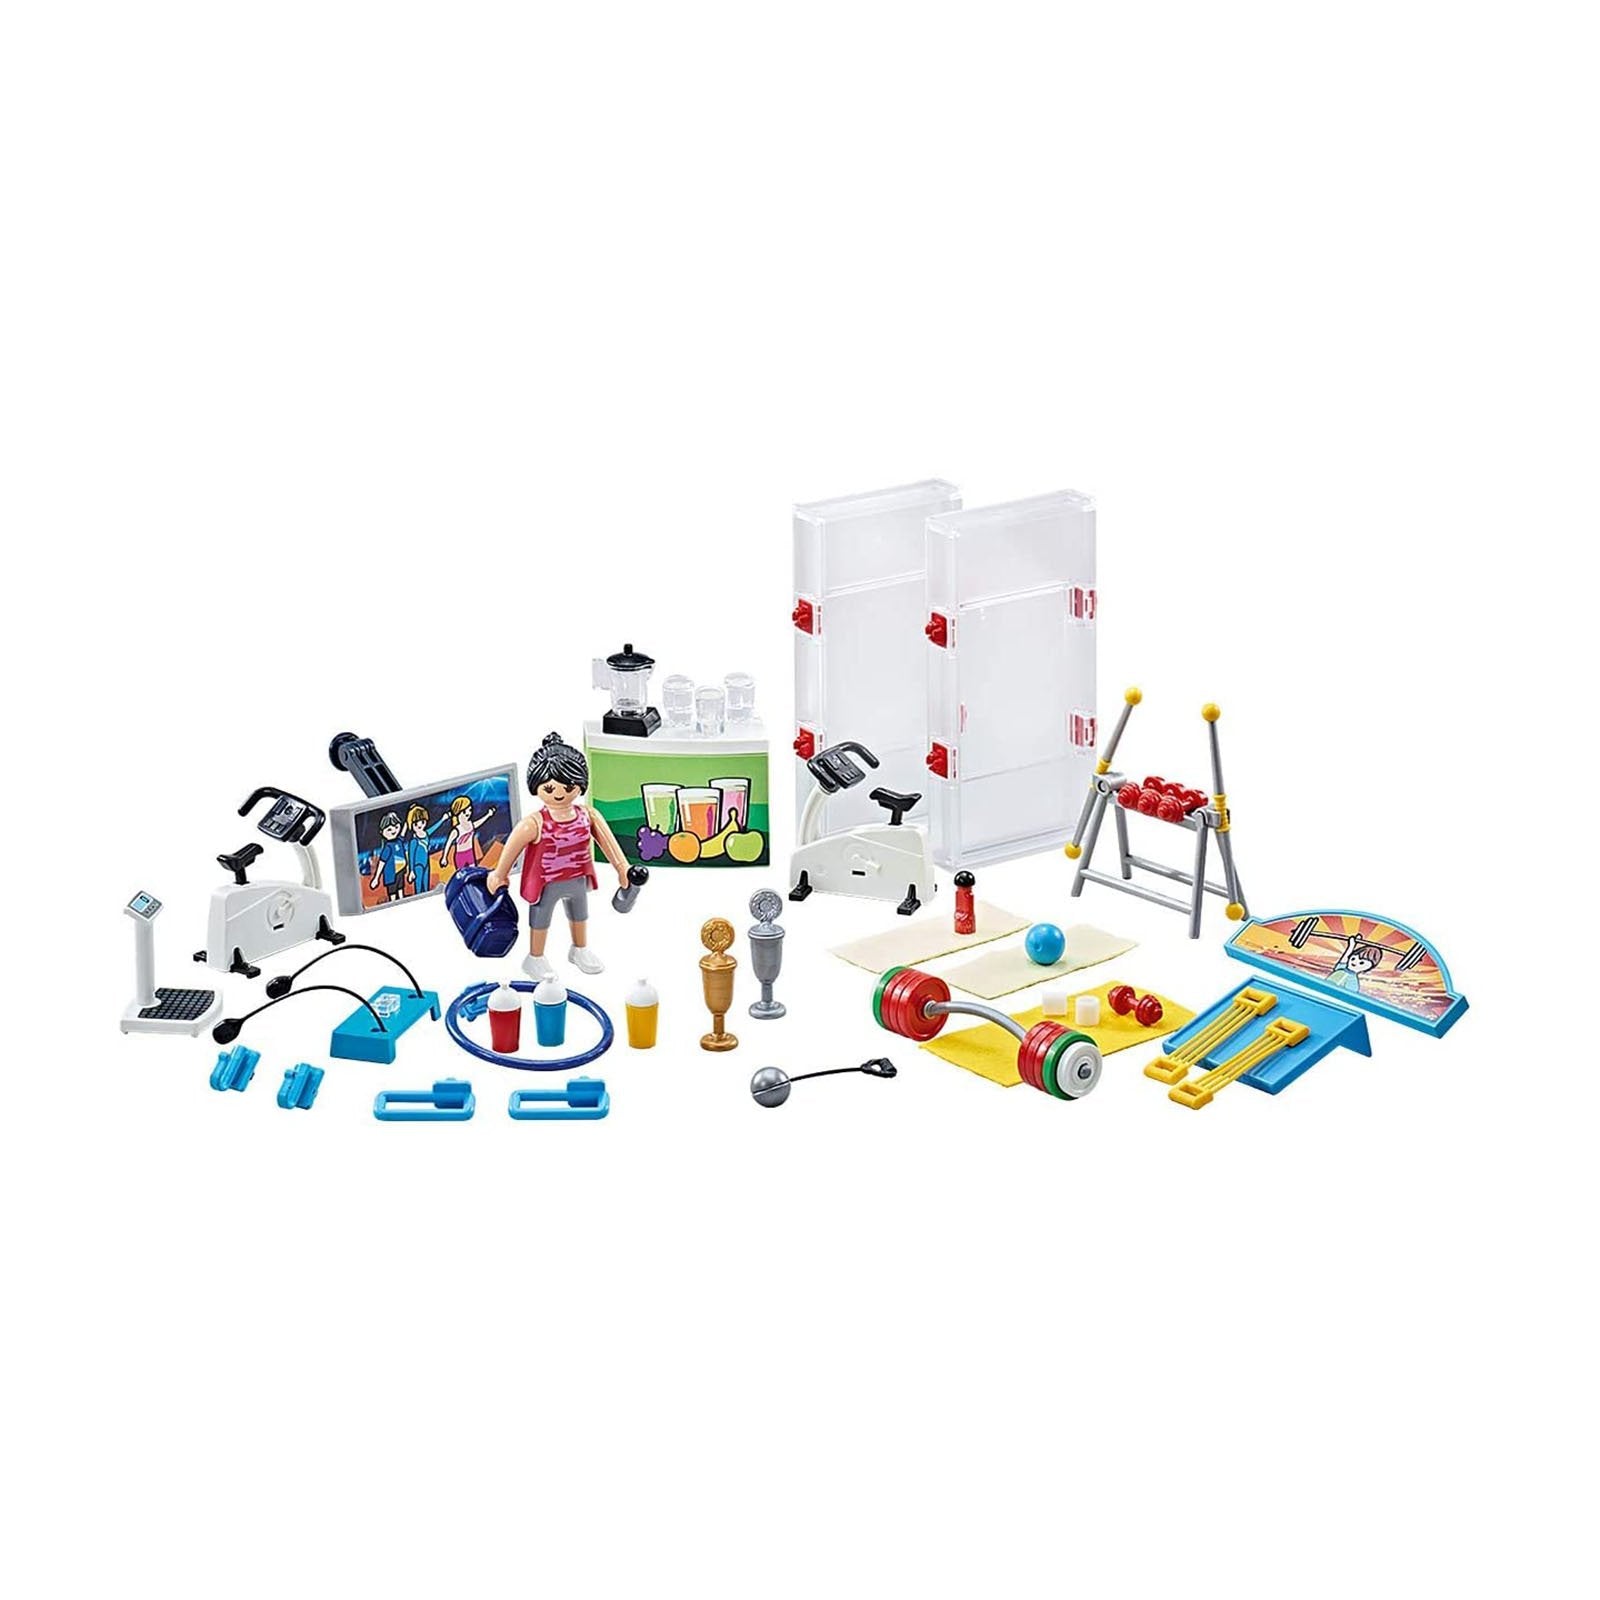 Playmobil Add-On Fitness Studio Building Set 9846